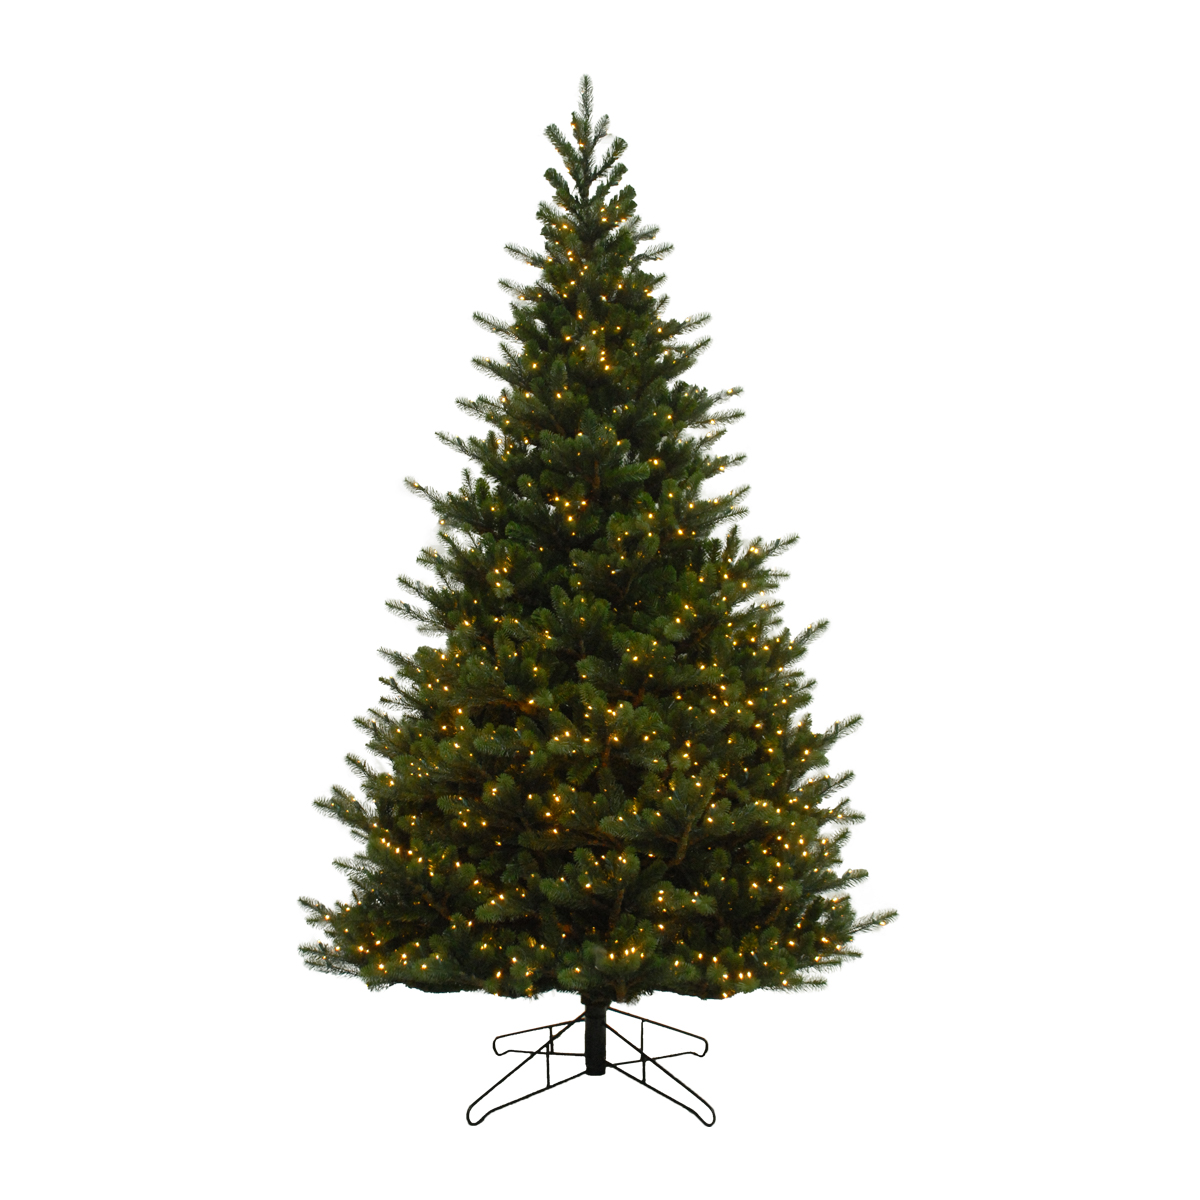 Sedona Pine Deluxe Christmas Tree - Warm White LED Glow - One-Plug Power Supply - 7.5ft Tall